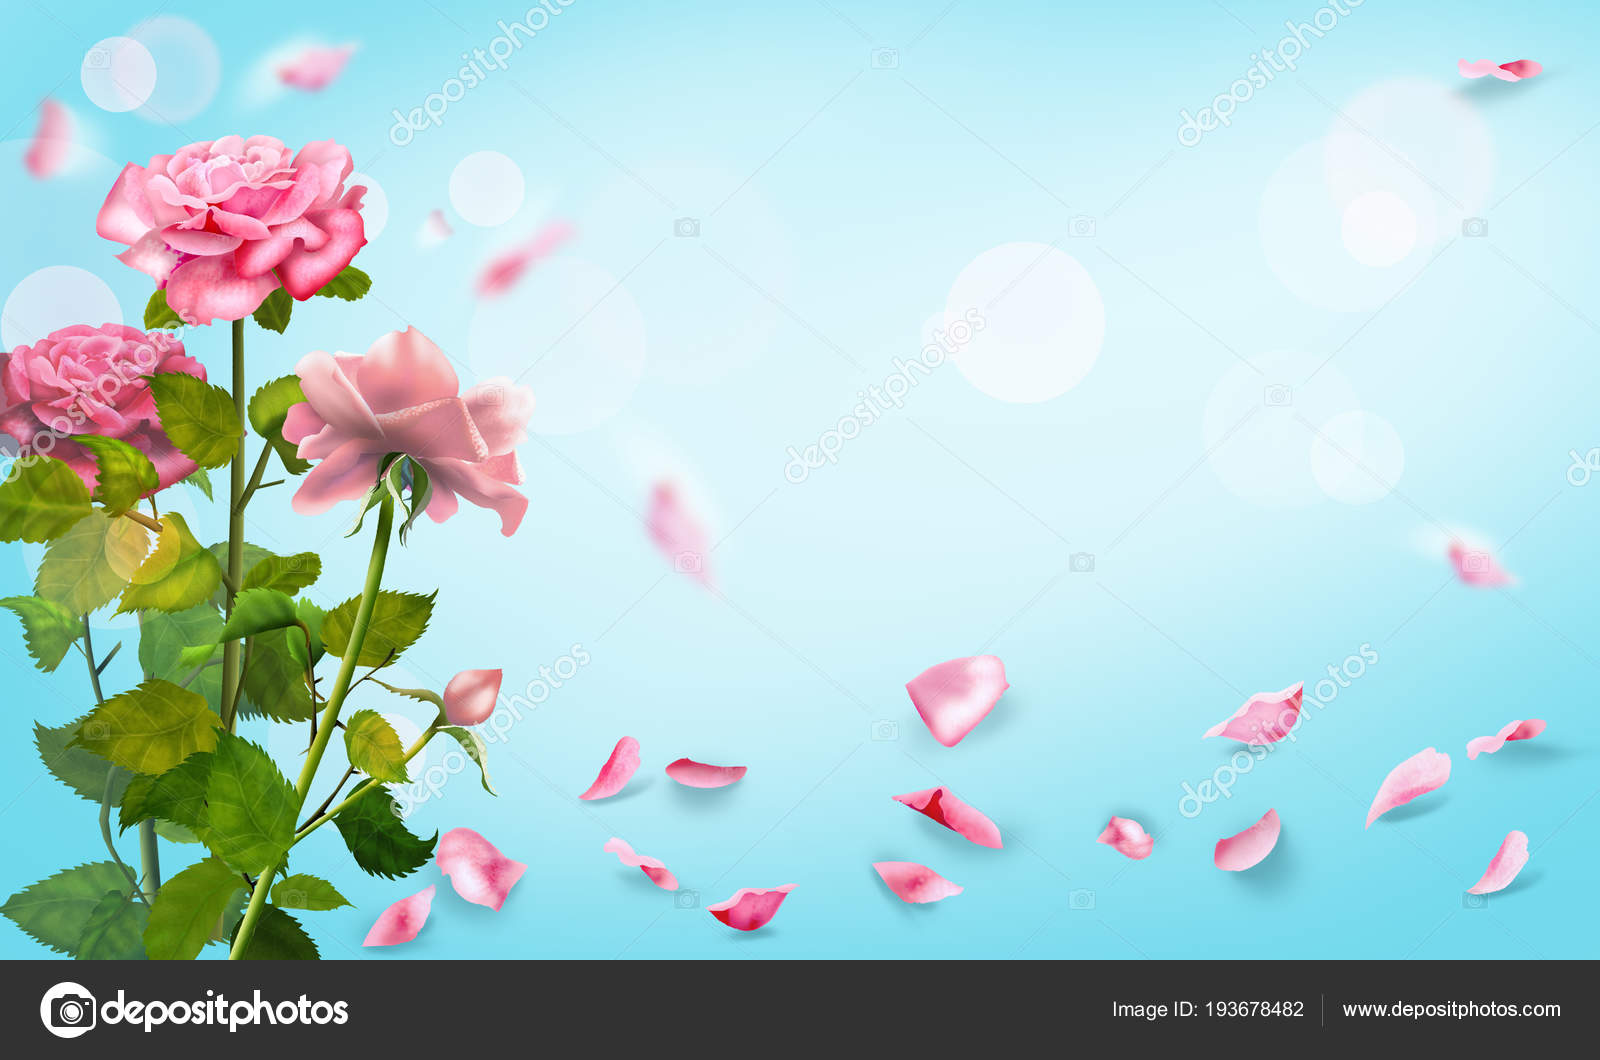 Rose Petals Wedding Flower Petals Romantic Decor Valentine's Day